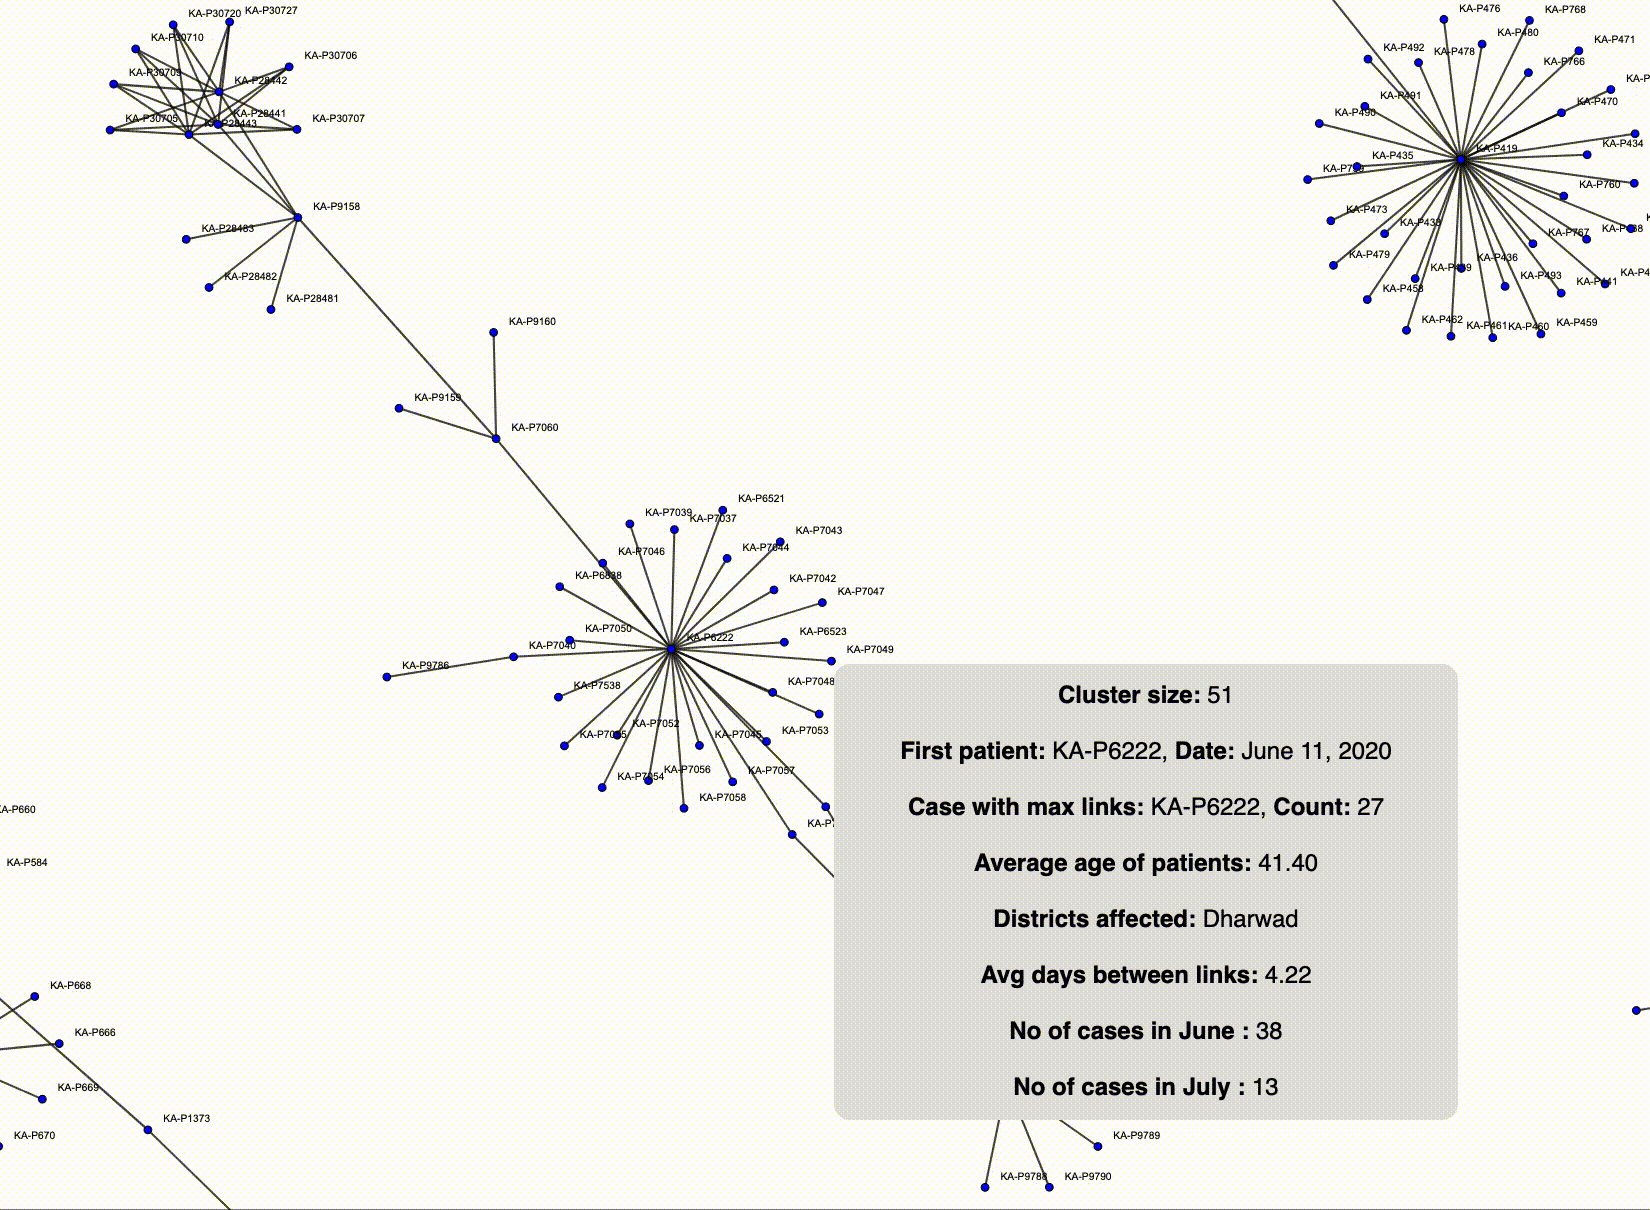 Intra-district cluster, a timeline